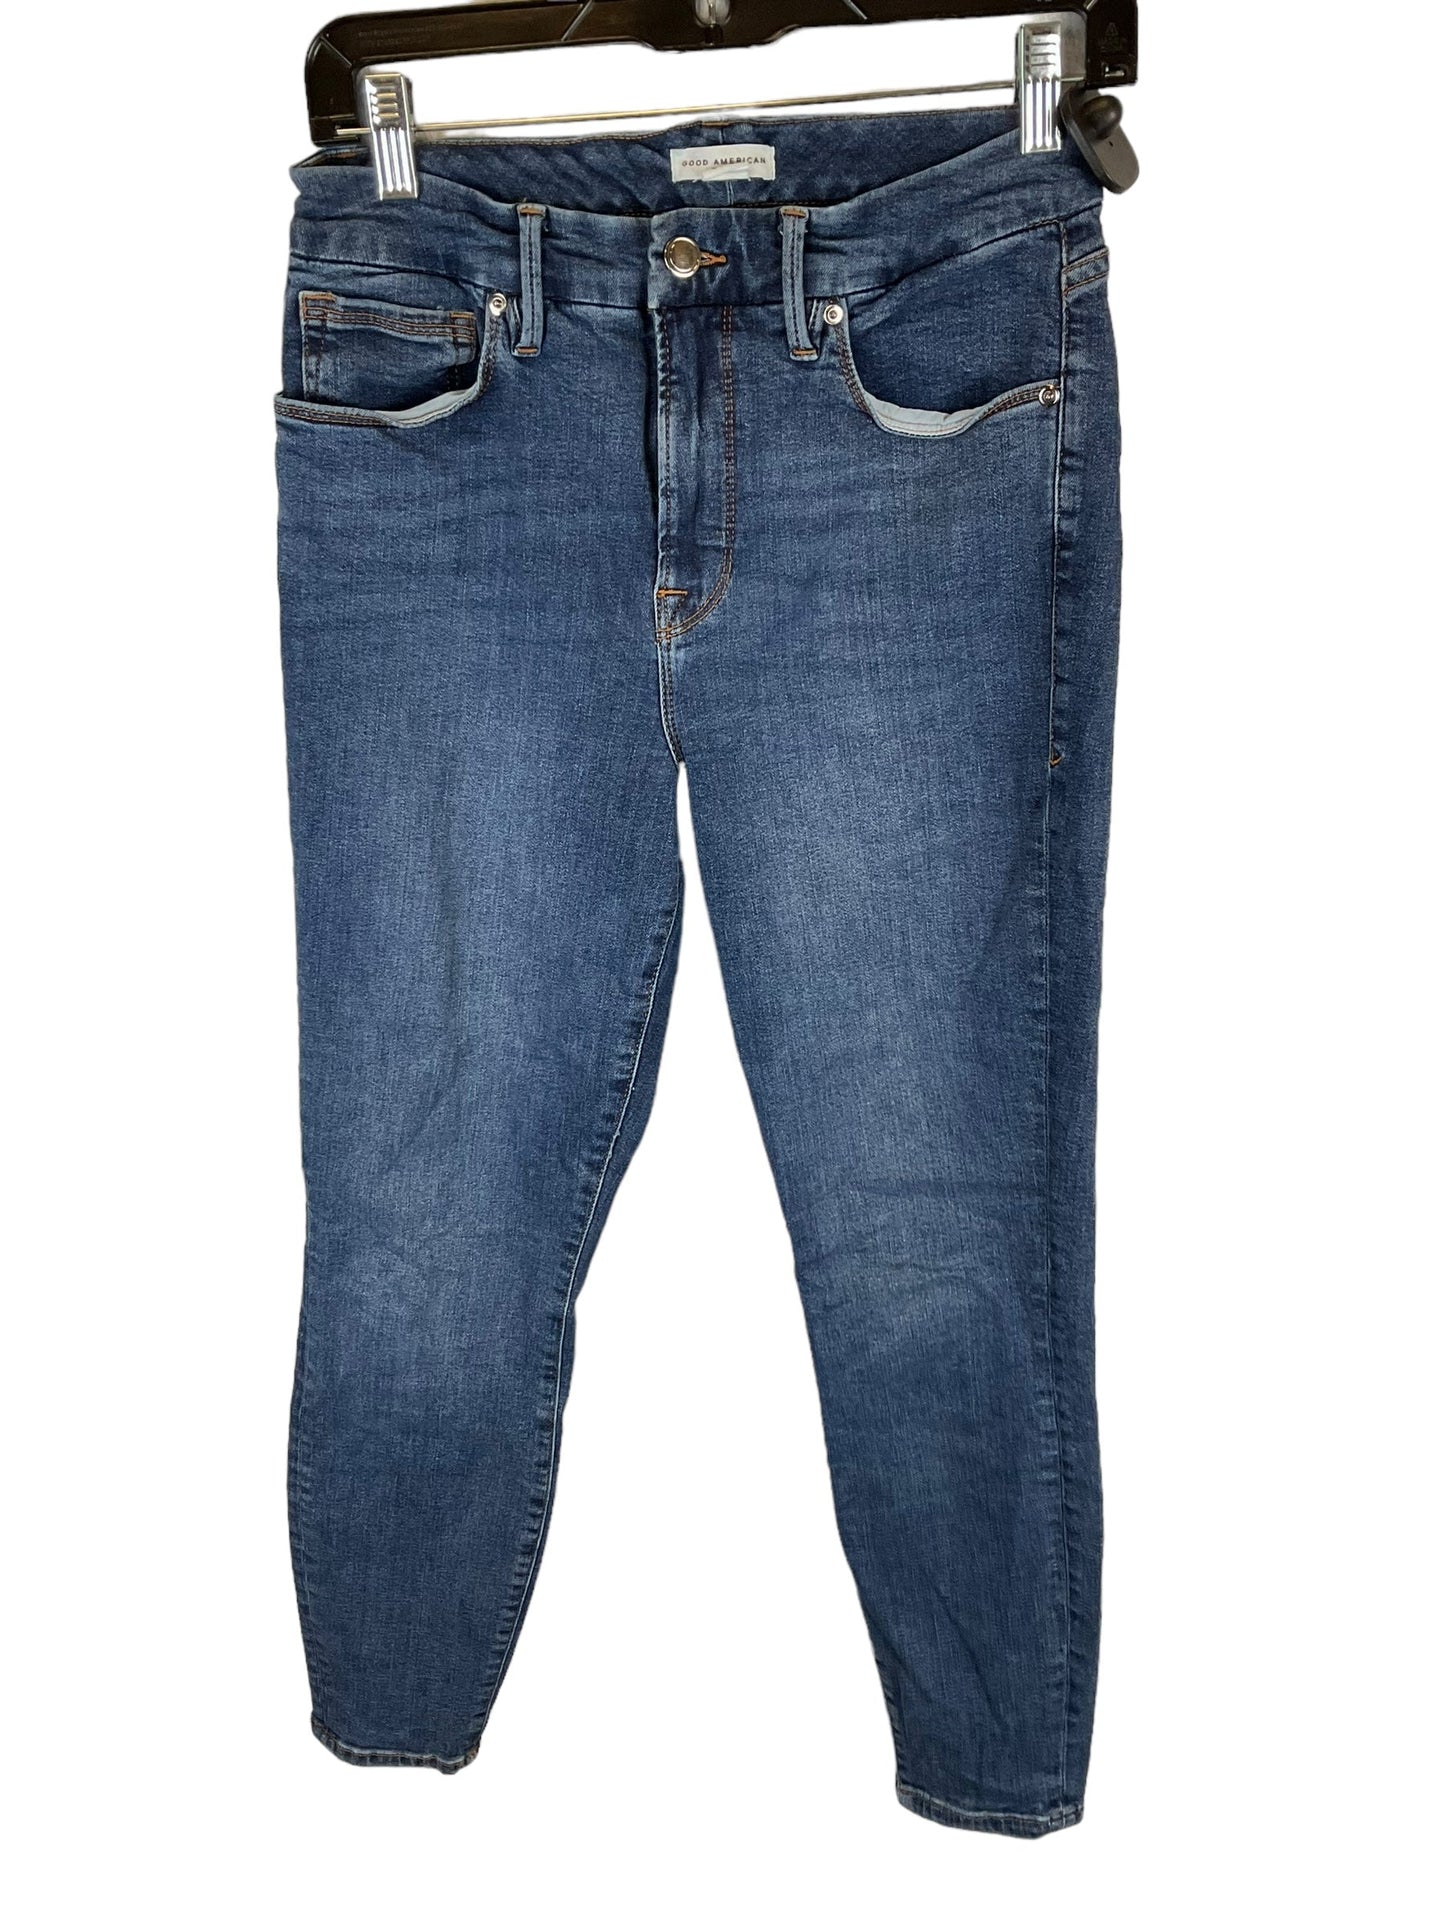 Blue Denim Jeans Designer Good American, Size 8